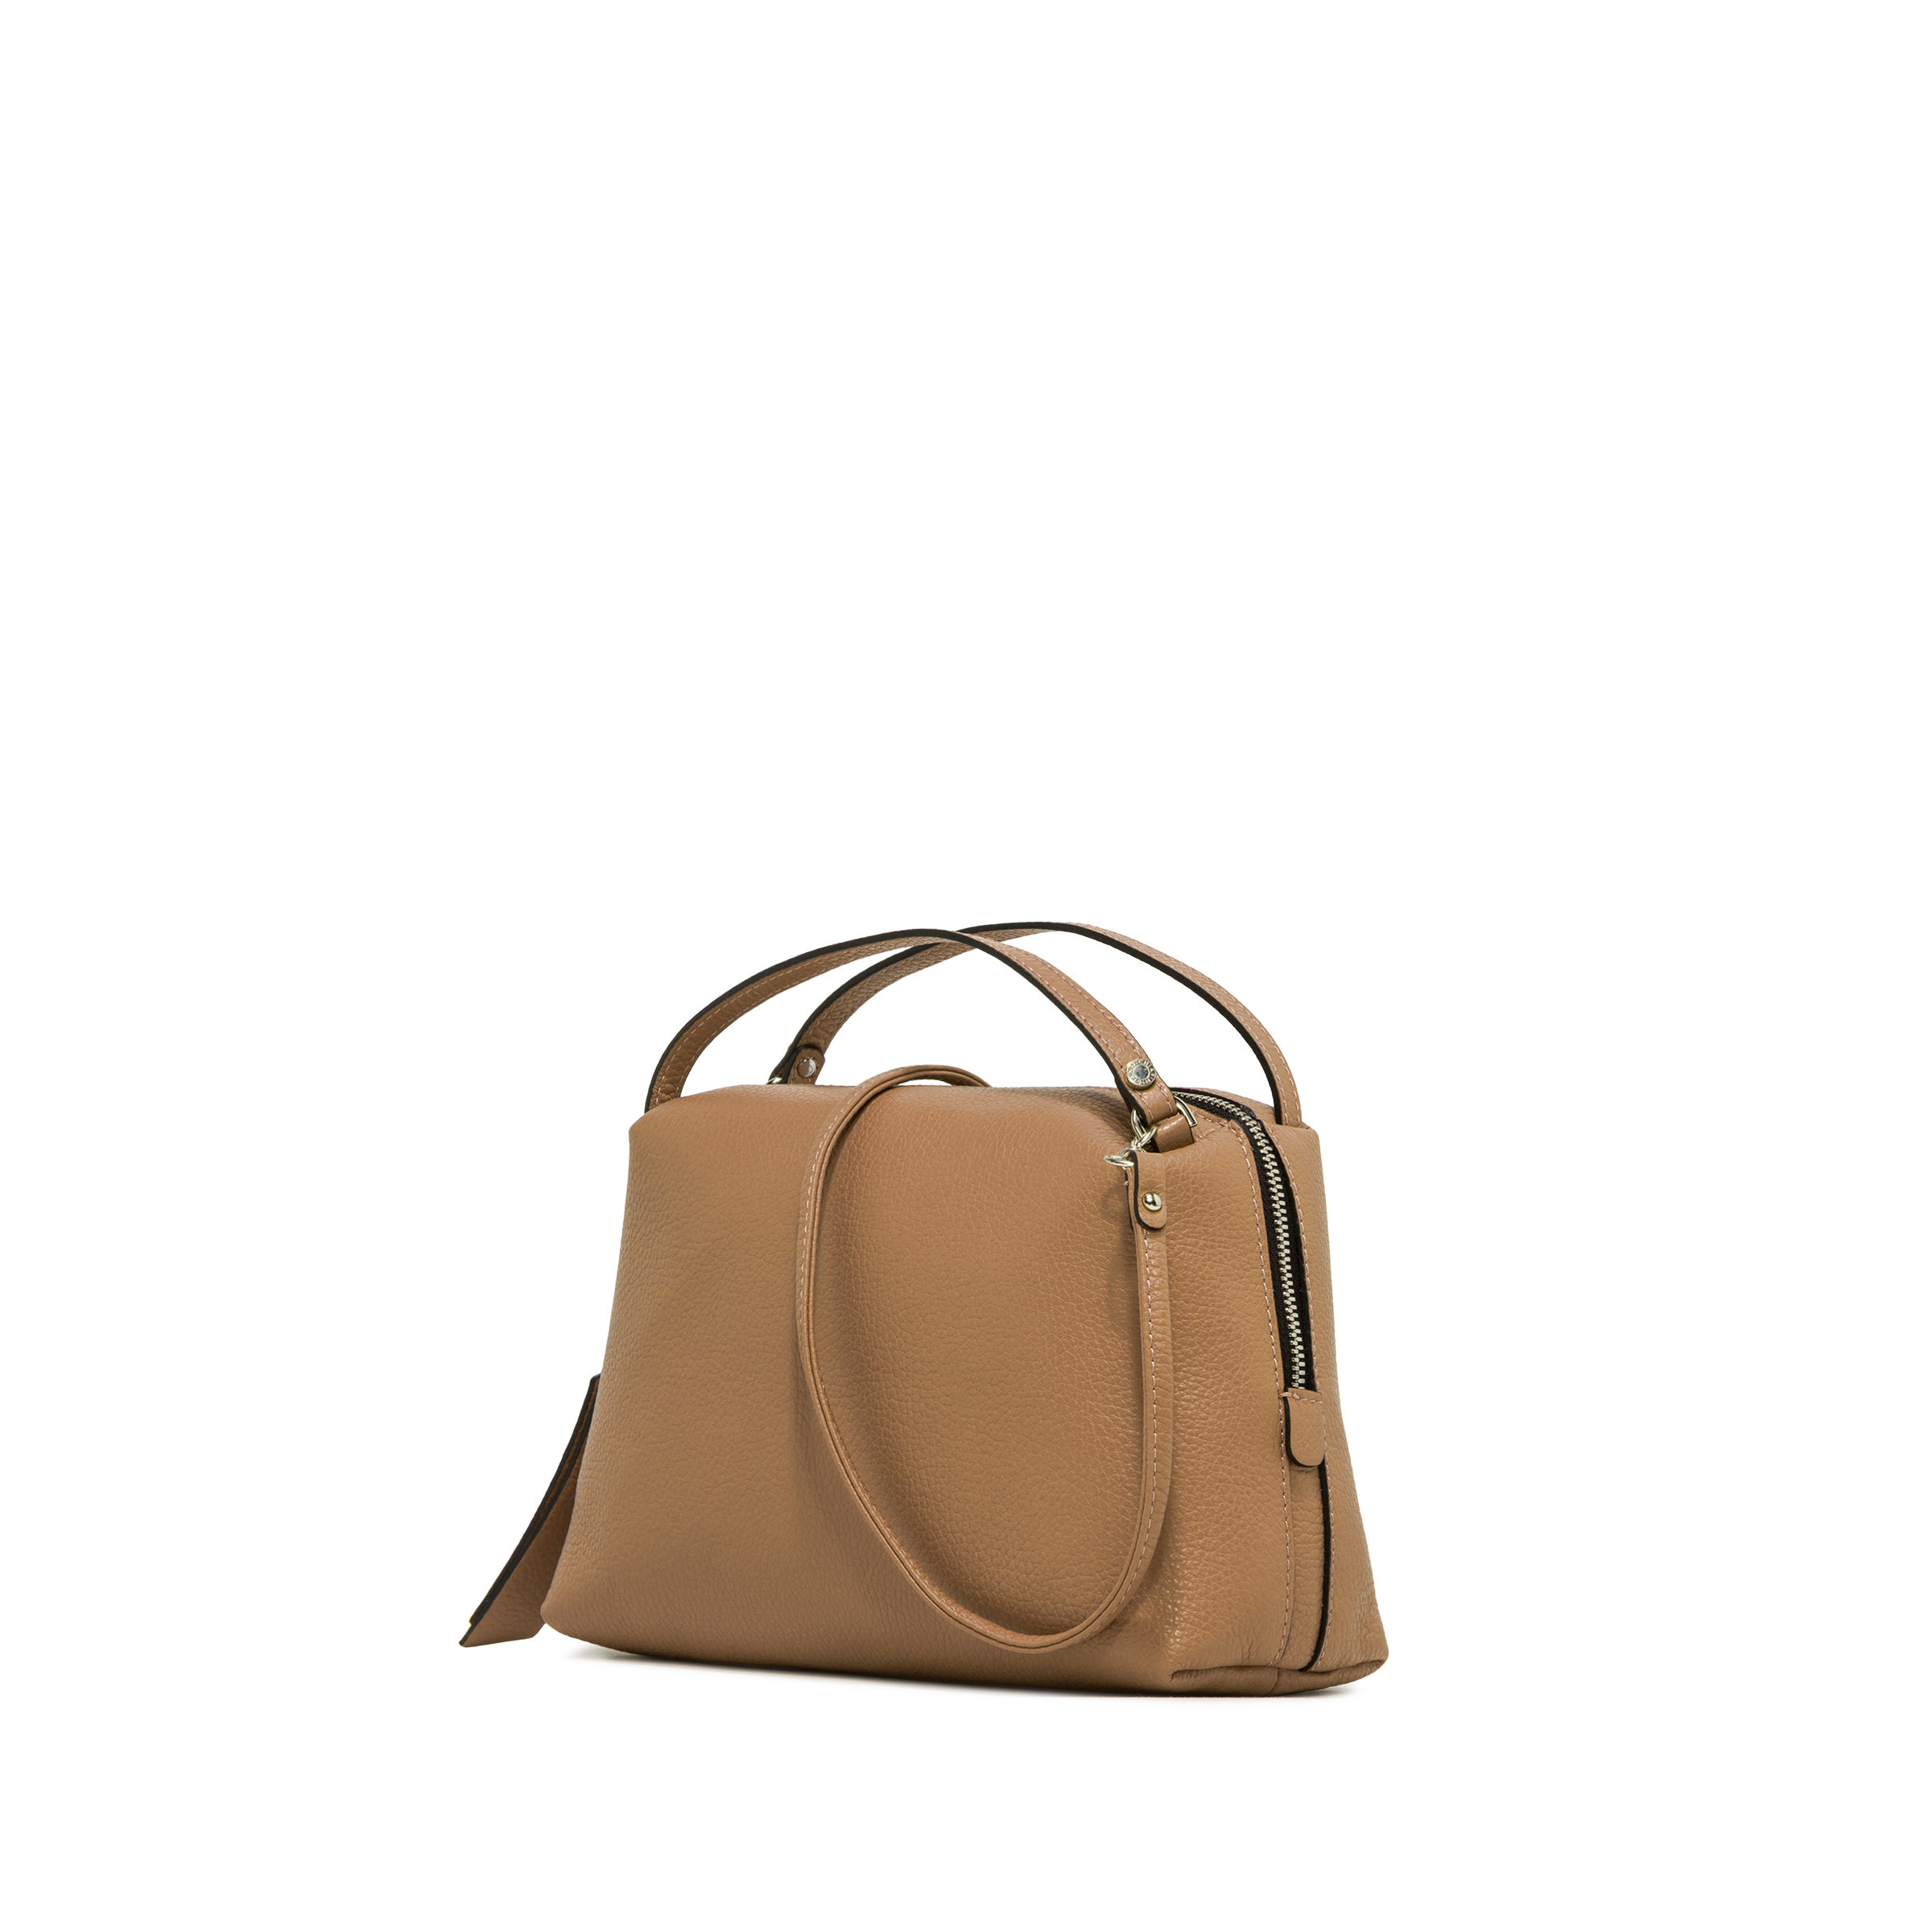 Gianni Chiarini - Alifa bag in leather, Natural, large image number 2